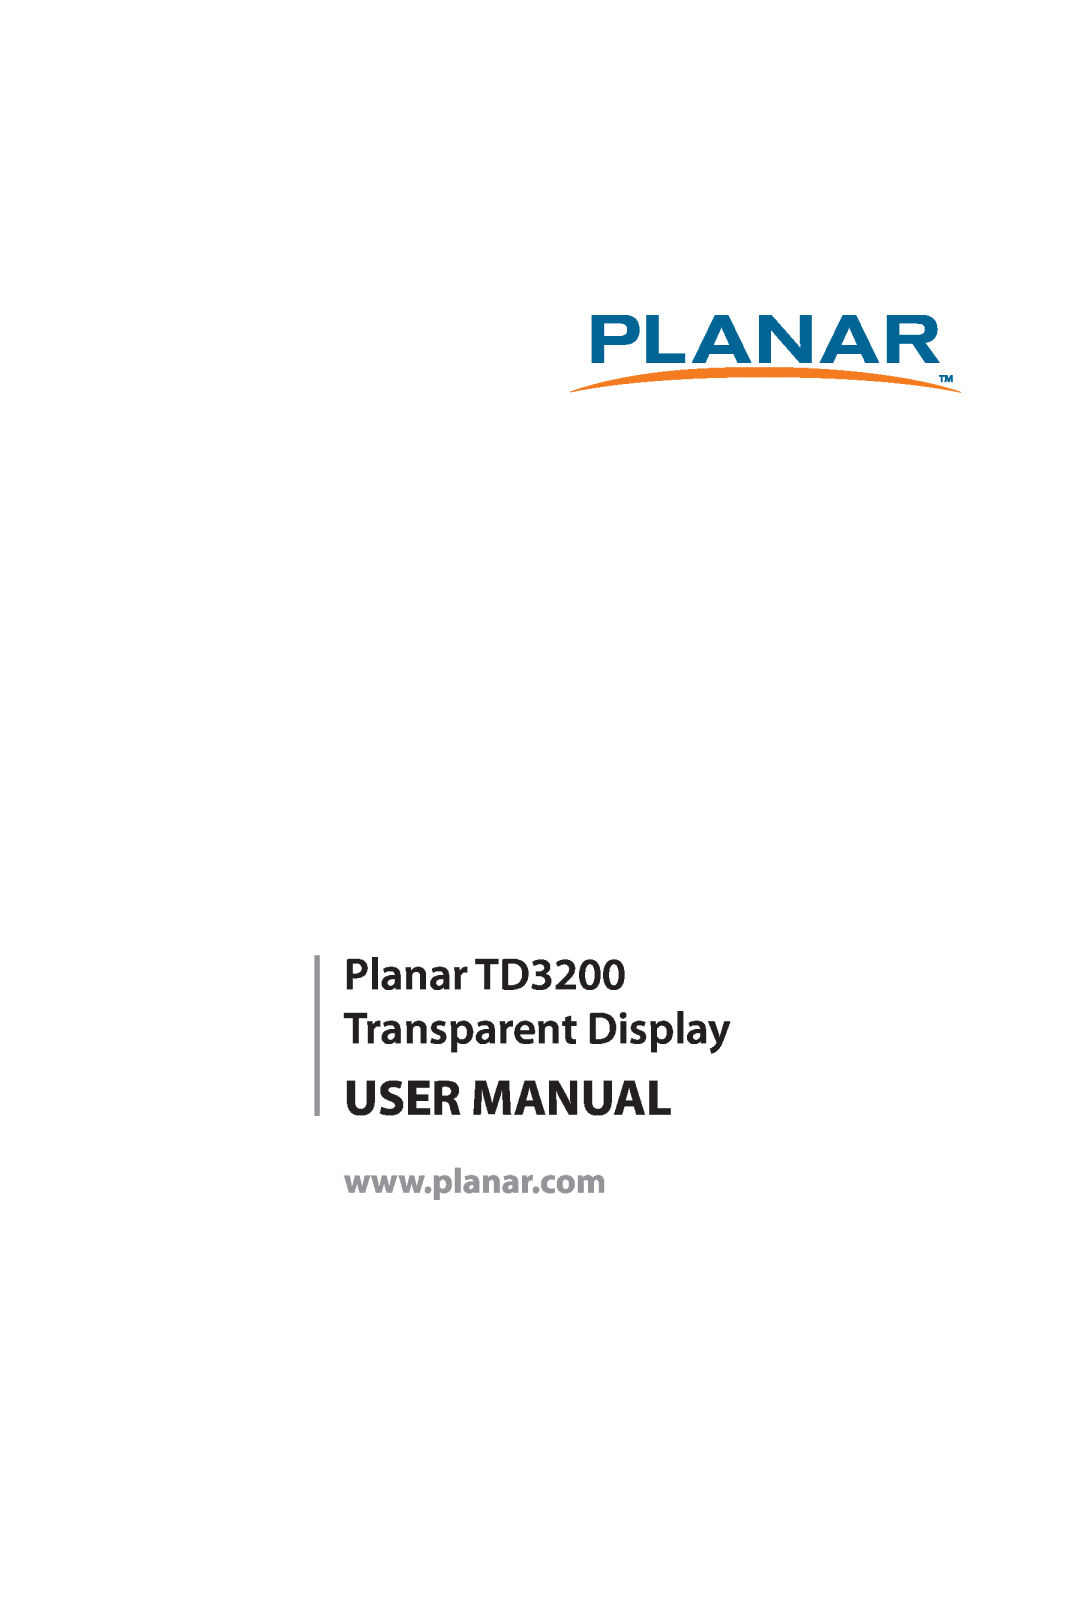 Planar user manual User Manual, Planar TD3200 Transparent Display 